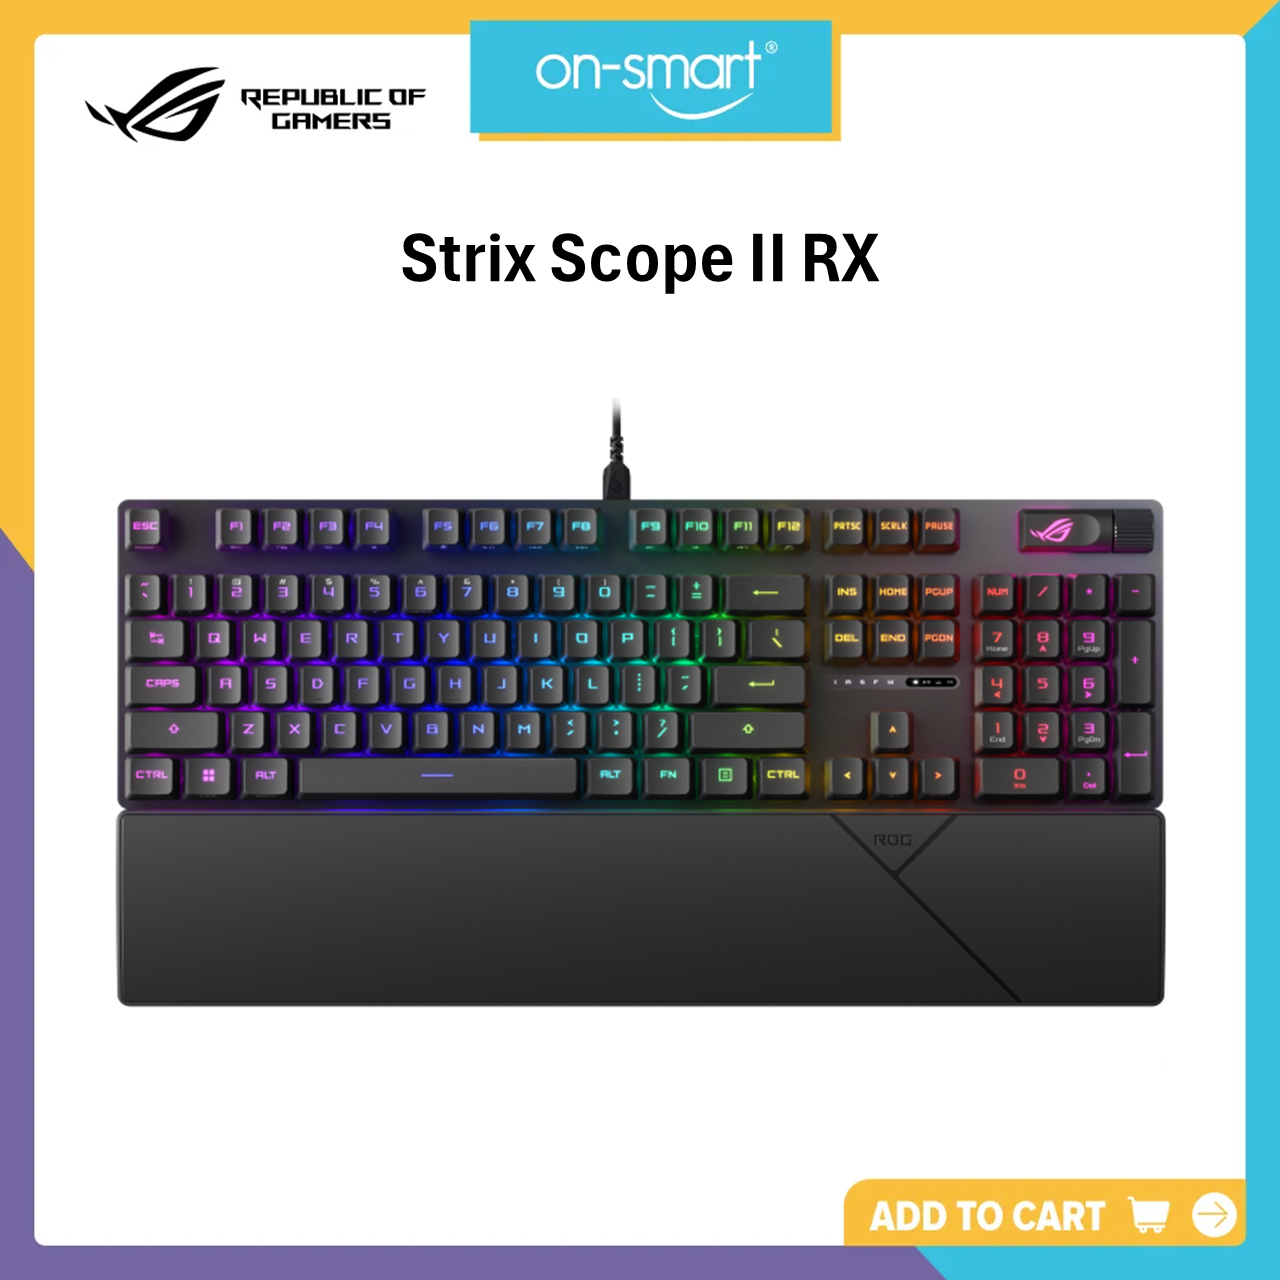 ASUS XA12 ROG Strix Scope II RX Gaming Keyboard